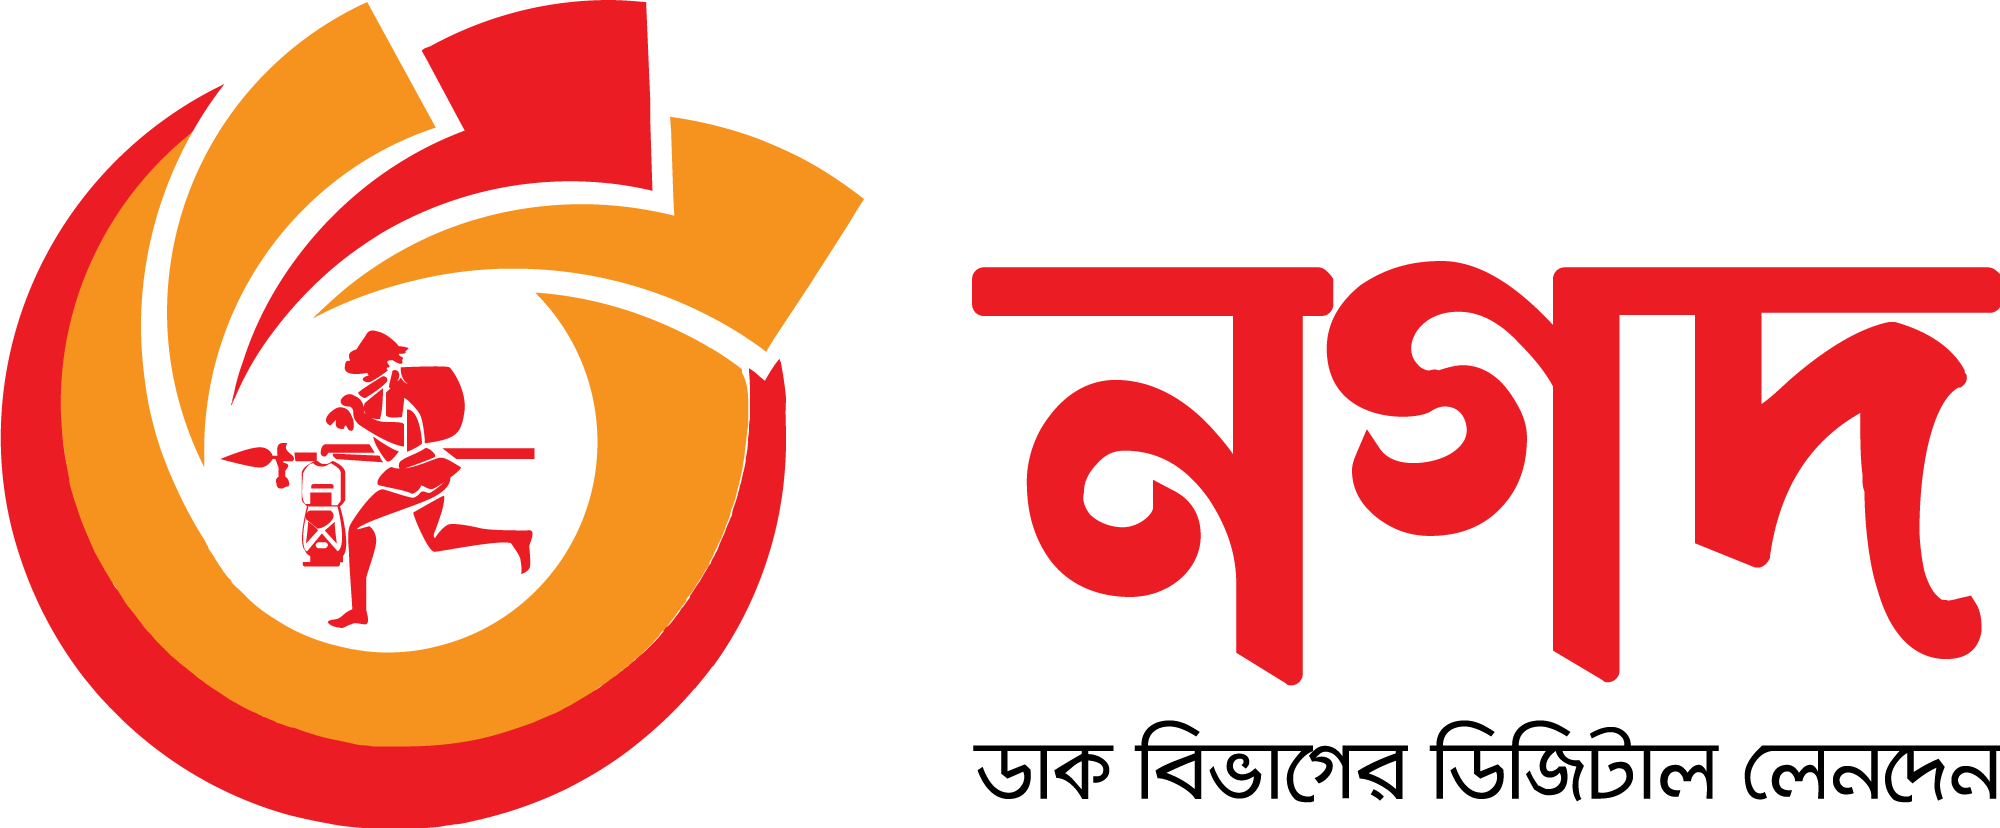 nagad transparent logo